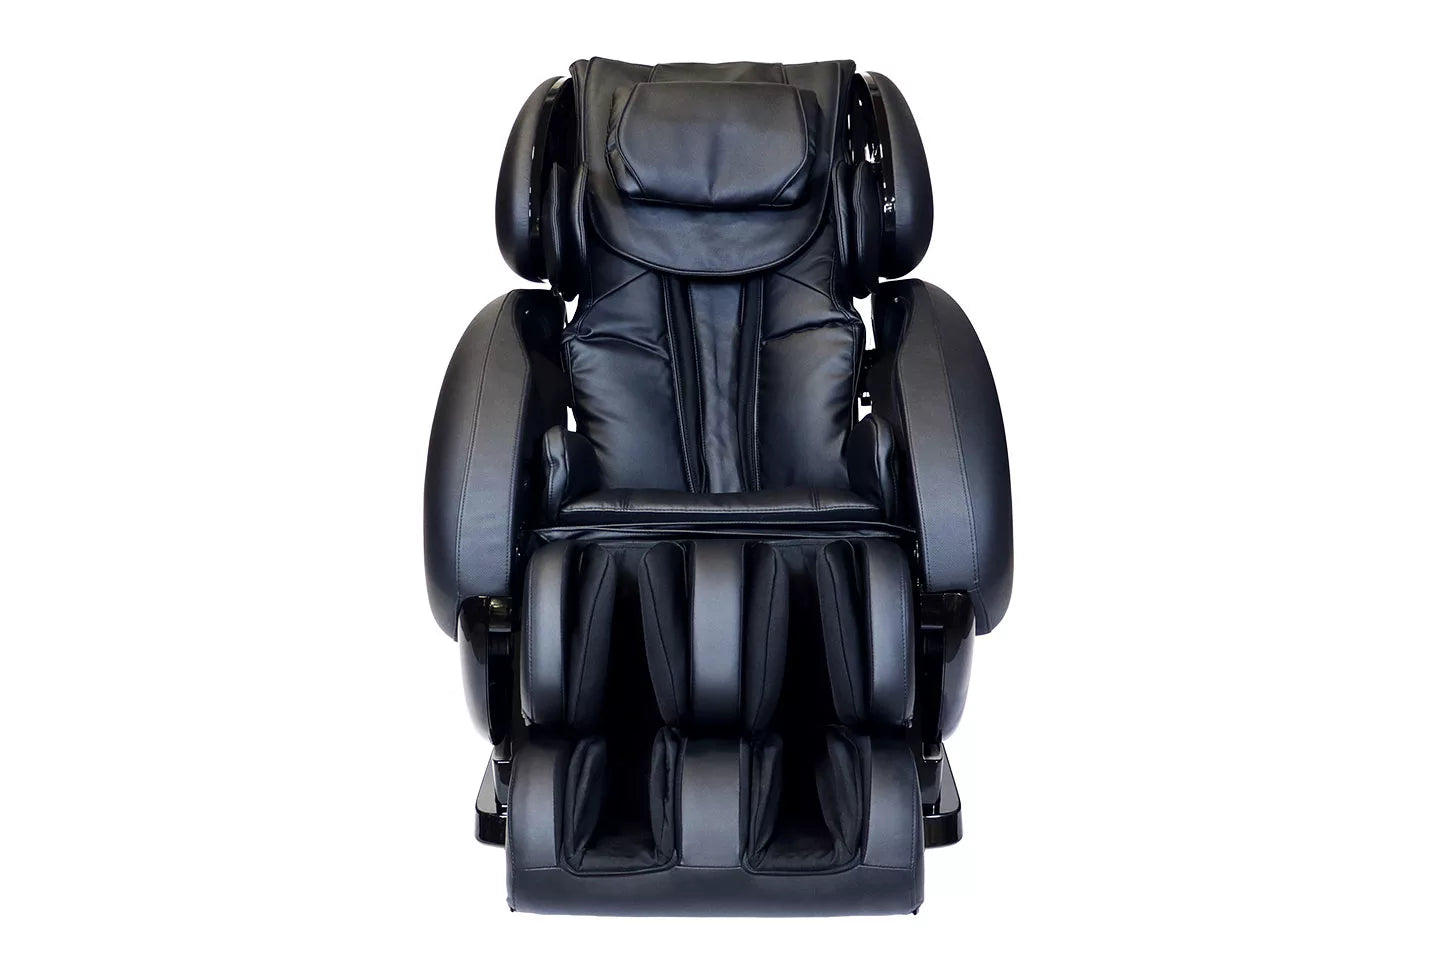 Infinity IT-8500™ X3 3D/4D Massage Chair